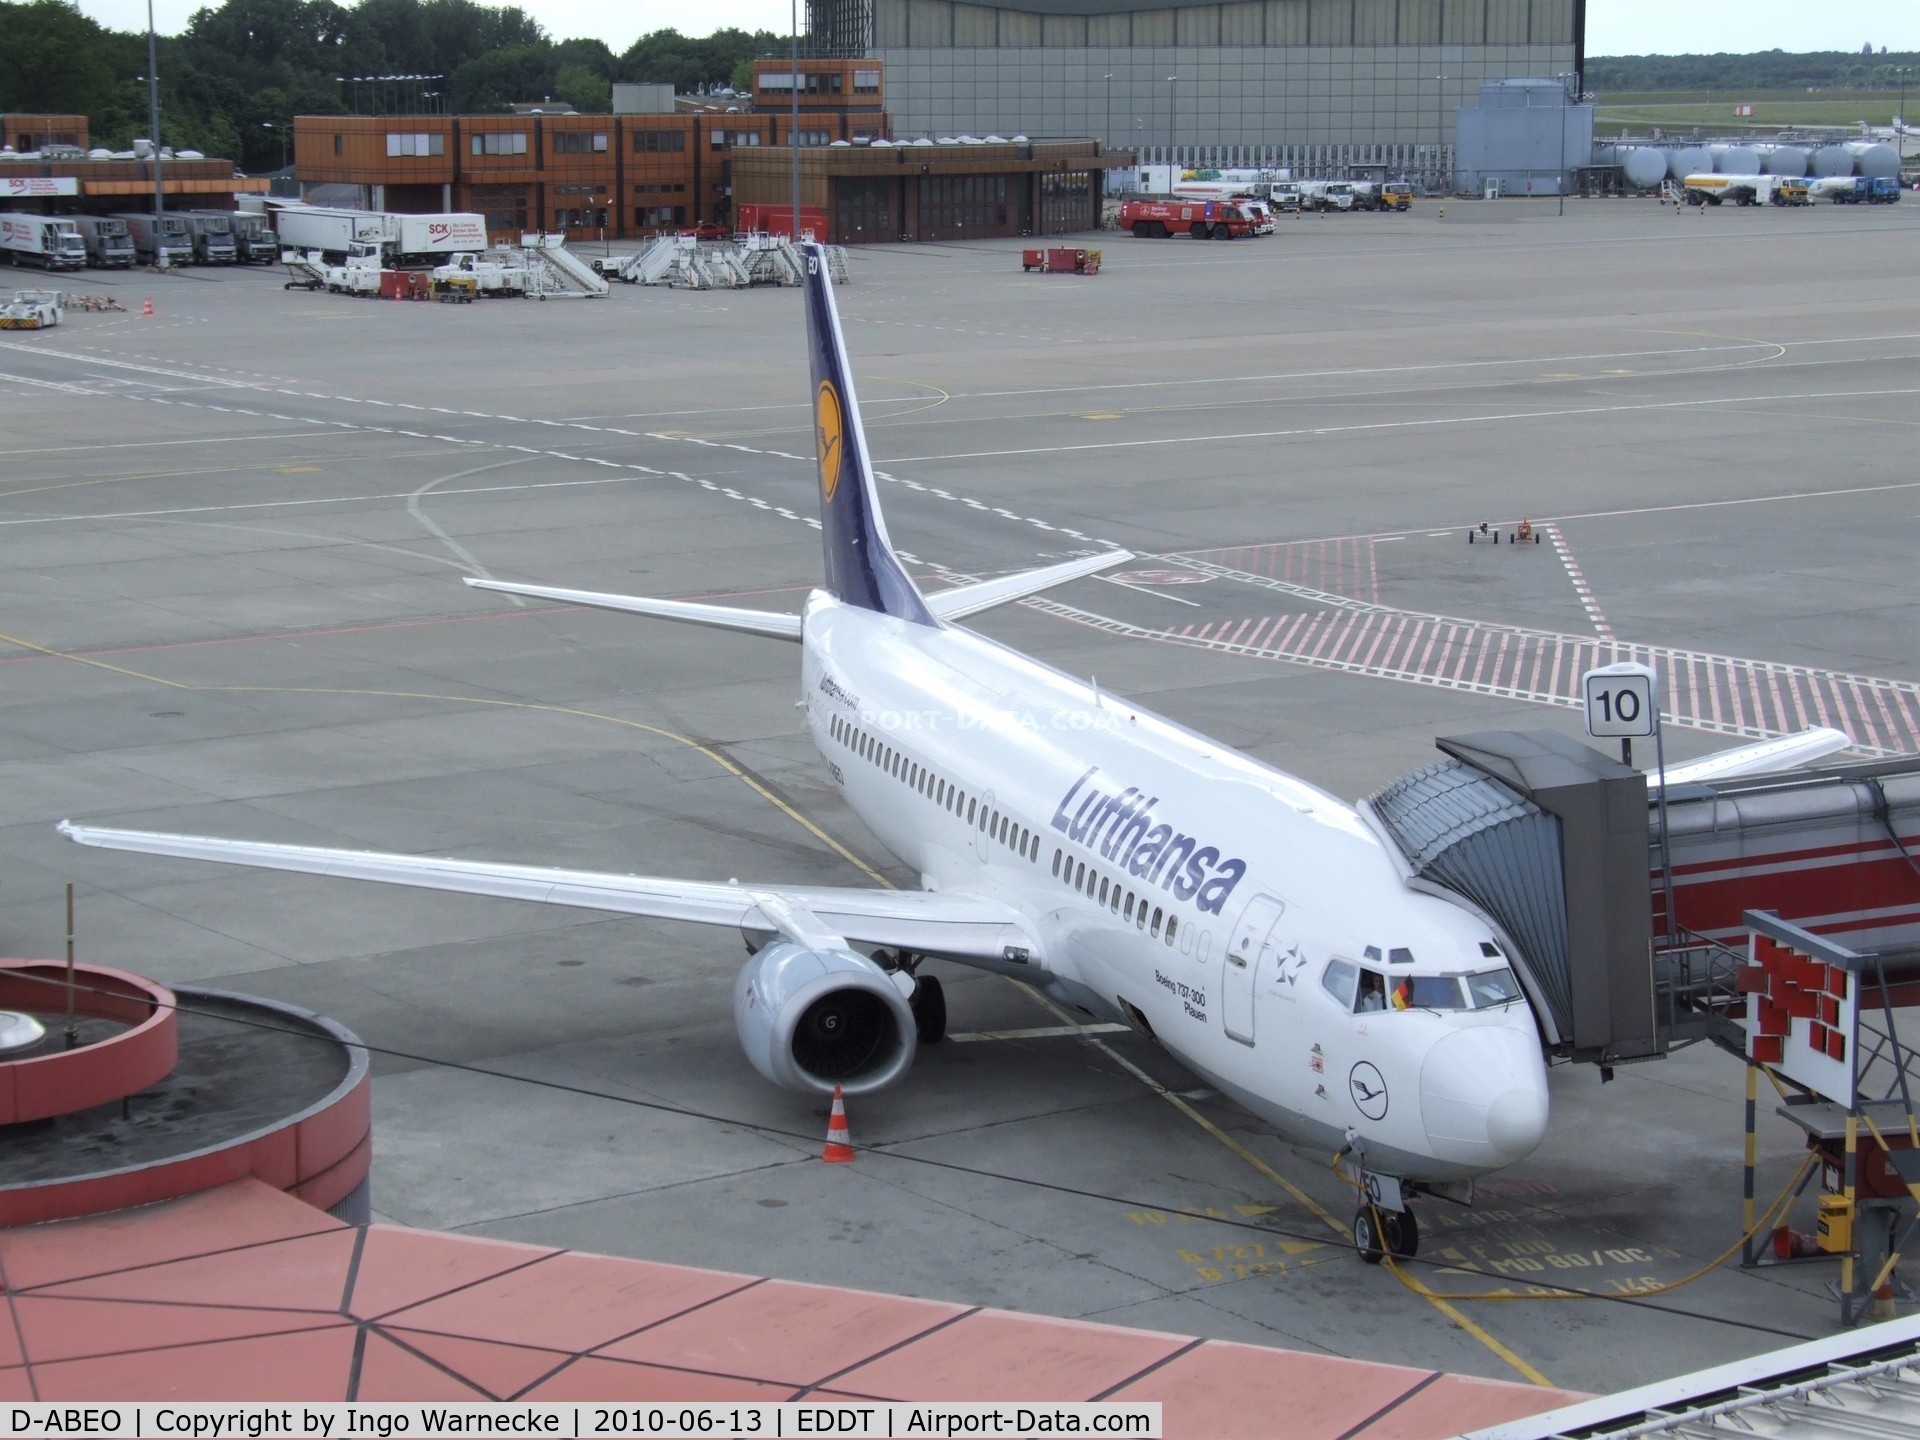 D-ABEO, 1991 Boeing 737-330 C/N 26429, Boeing 737-330 of Lufthansa at Berlin/Tegel airport